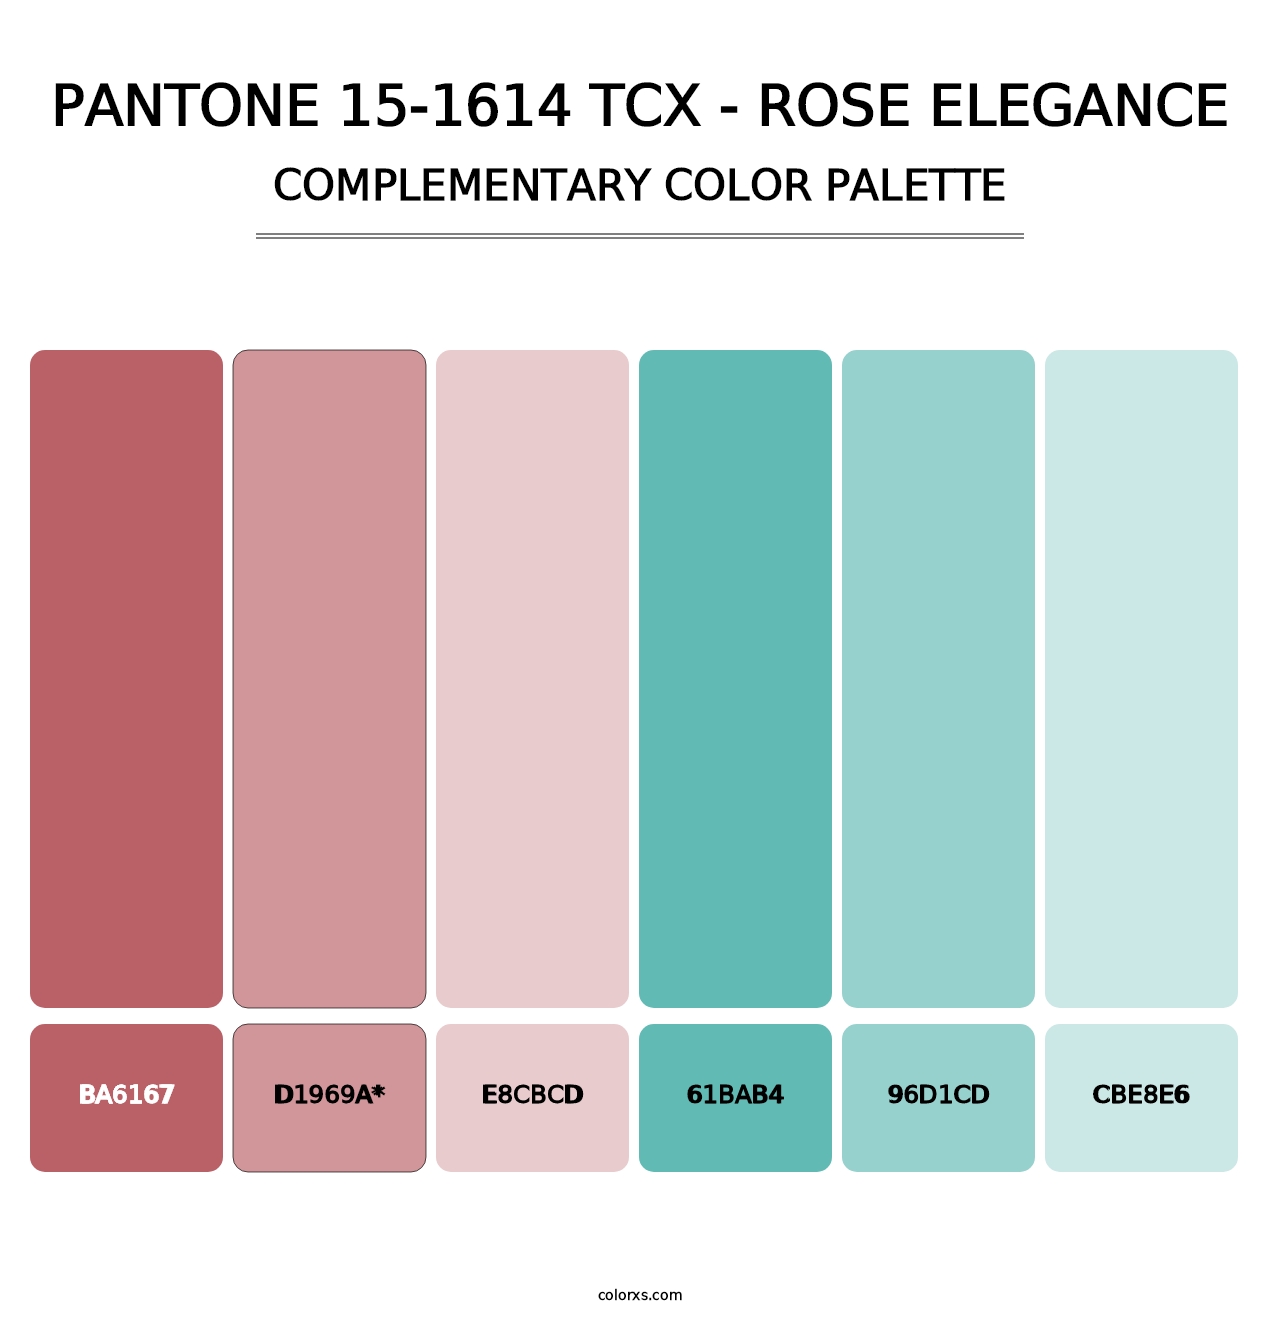 PANTONE 15-1614 TCX - Rose Elegance - Complementary Color Palette